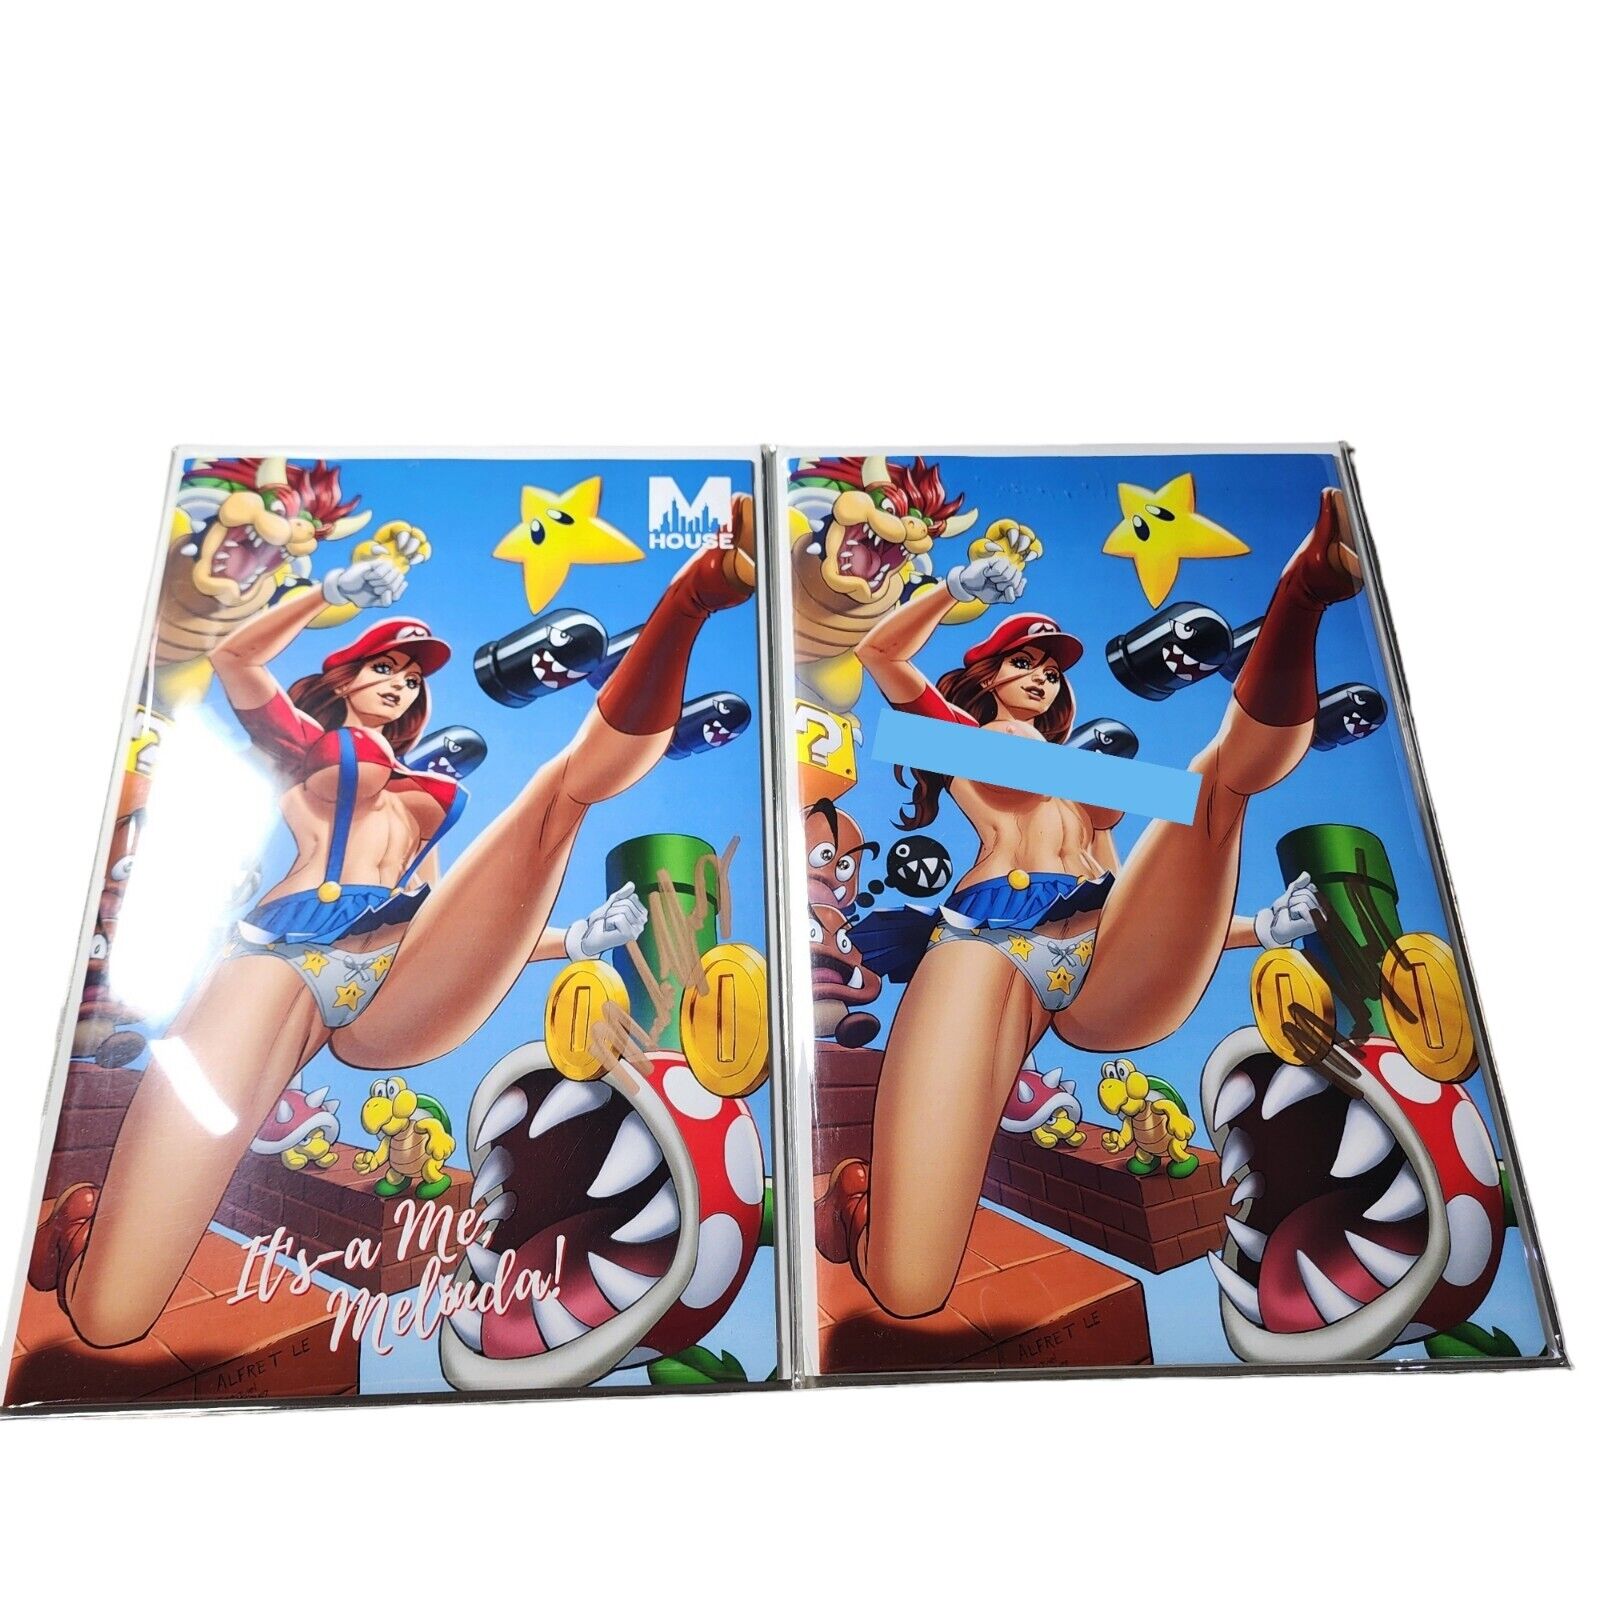 M House Super Mario Mel SET Nice & TOPLE$$ Melinda's Comics NM SIGNED